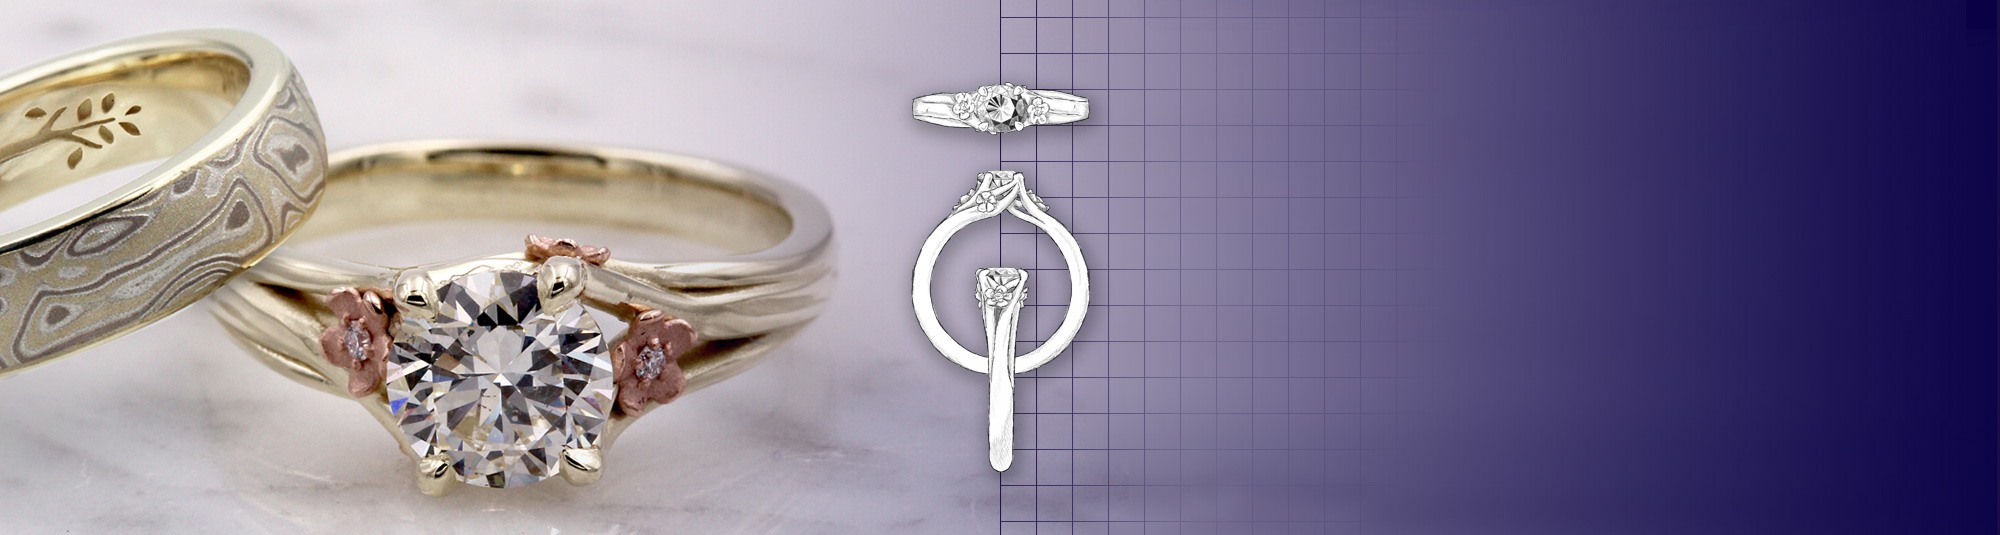 violin forlade eksegese Design Your Own Unique Engagement Rings, Custom Wedding Band | Krikawa